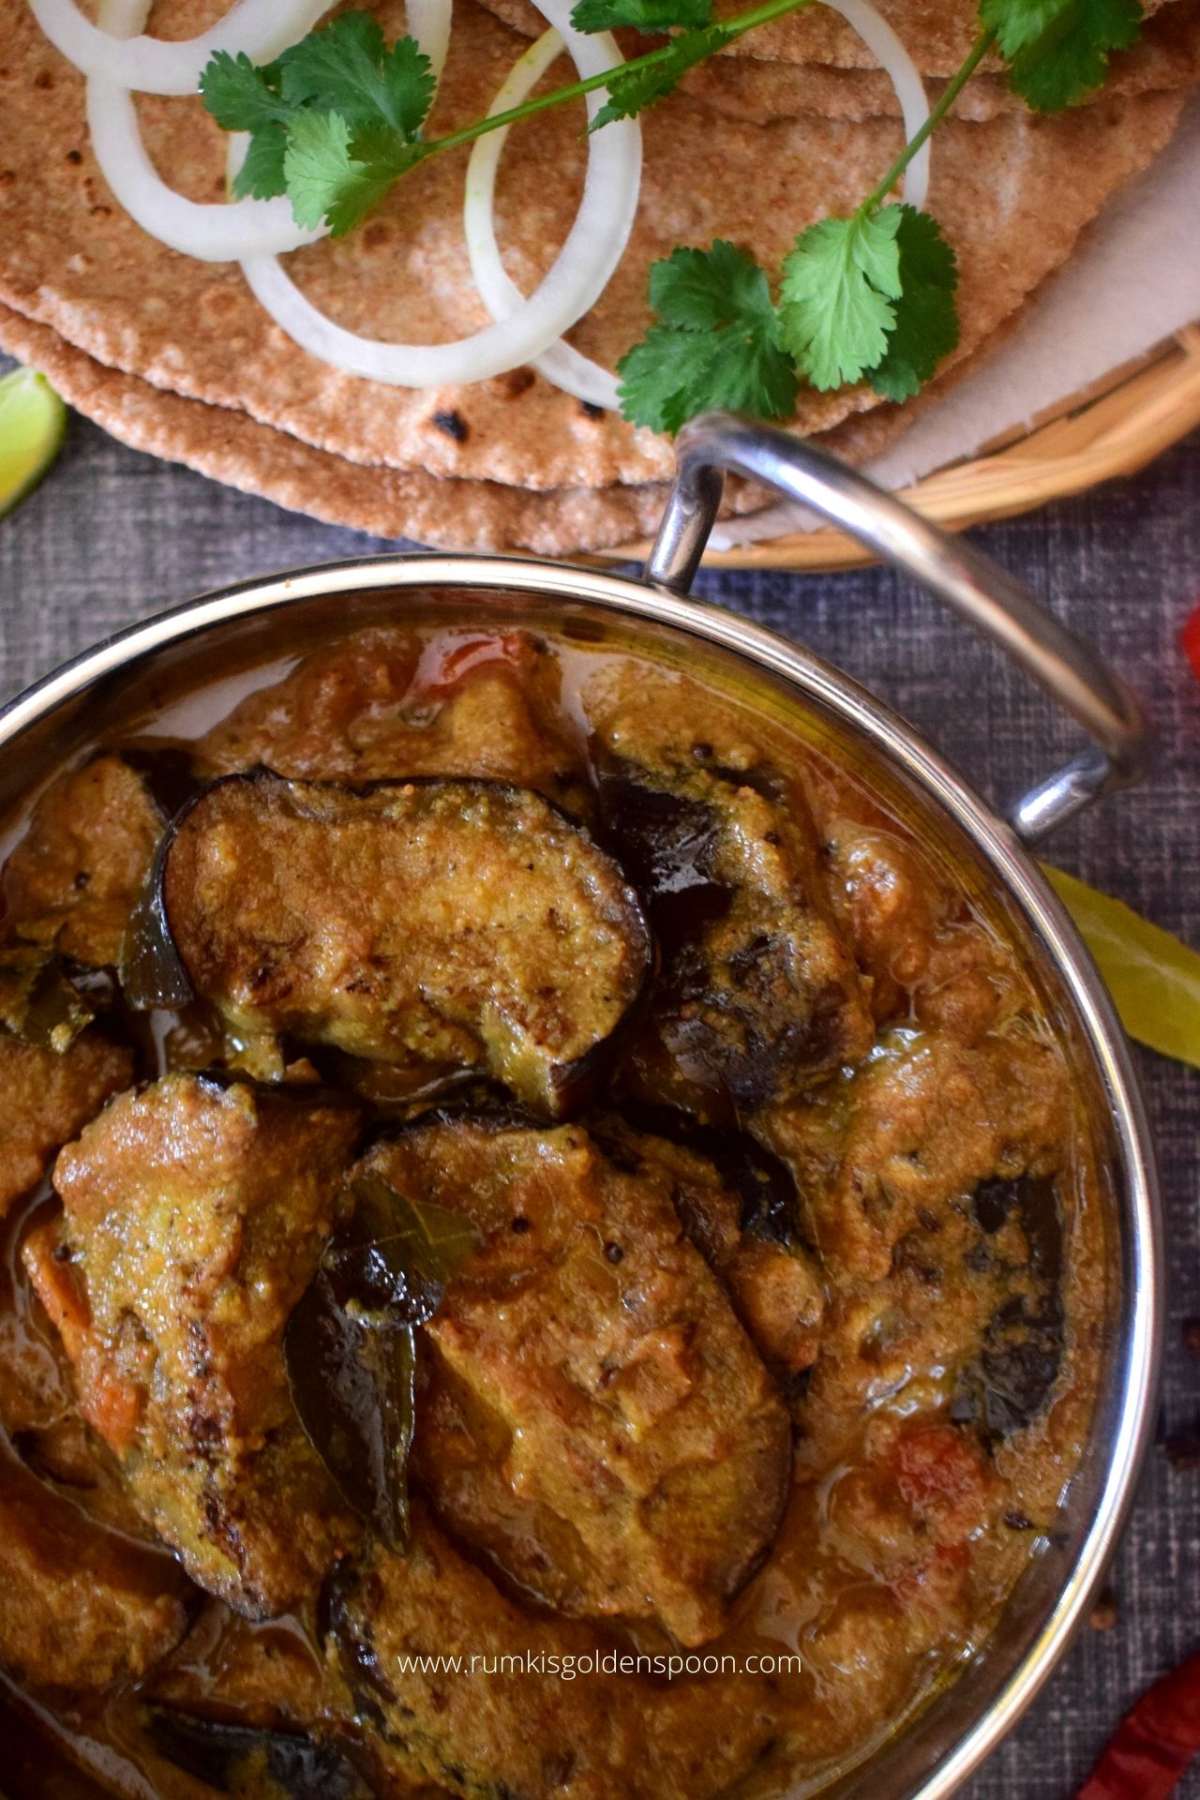 brinjal curry for biryani, brinjal gravy for biryani, ennai kathirikai kulambu recipe, brinjal pachadi, kathirikai pachadi, brinjal curry for biryani chennai, hyderabadi brinjal curry for biryani, how to make brinjal curry for biryani, brinjal curry for biryani muslim style, kathirikai gravy for biryani, ennai kathirikai kulambu in tamil, brinjal gravy for biryani recipe, brinjal curry for biryani recipe, biryani side dish brinjal gravy, brinjal masala for biryani, kathirikai pachadi for biryani, brinjal pachadi for biryani, brinjal curry for biryani home cooking, brinjal curry with biryani, how to make brinjal gravy for biryani, how to prepare brinjal gravy for biryani, brinjal curry, Indian curry recipe, vegetarian recipes of india, recipe with eggplant, eggplant recipe indian, recipe for brinjal curry, vegan Indian curry, vegan Indian curry recipes, Rumki's Golden Spoon